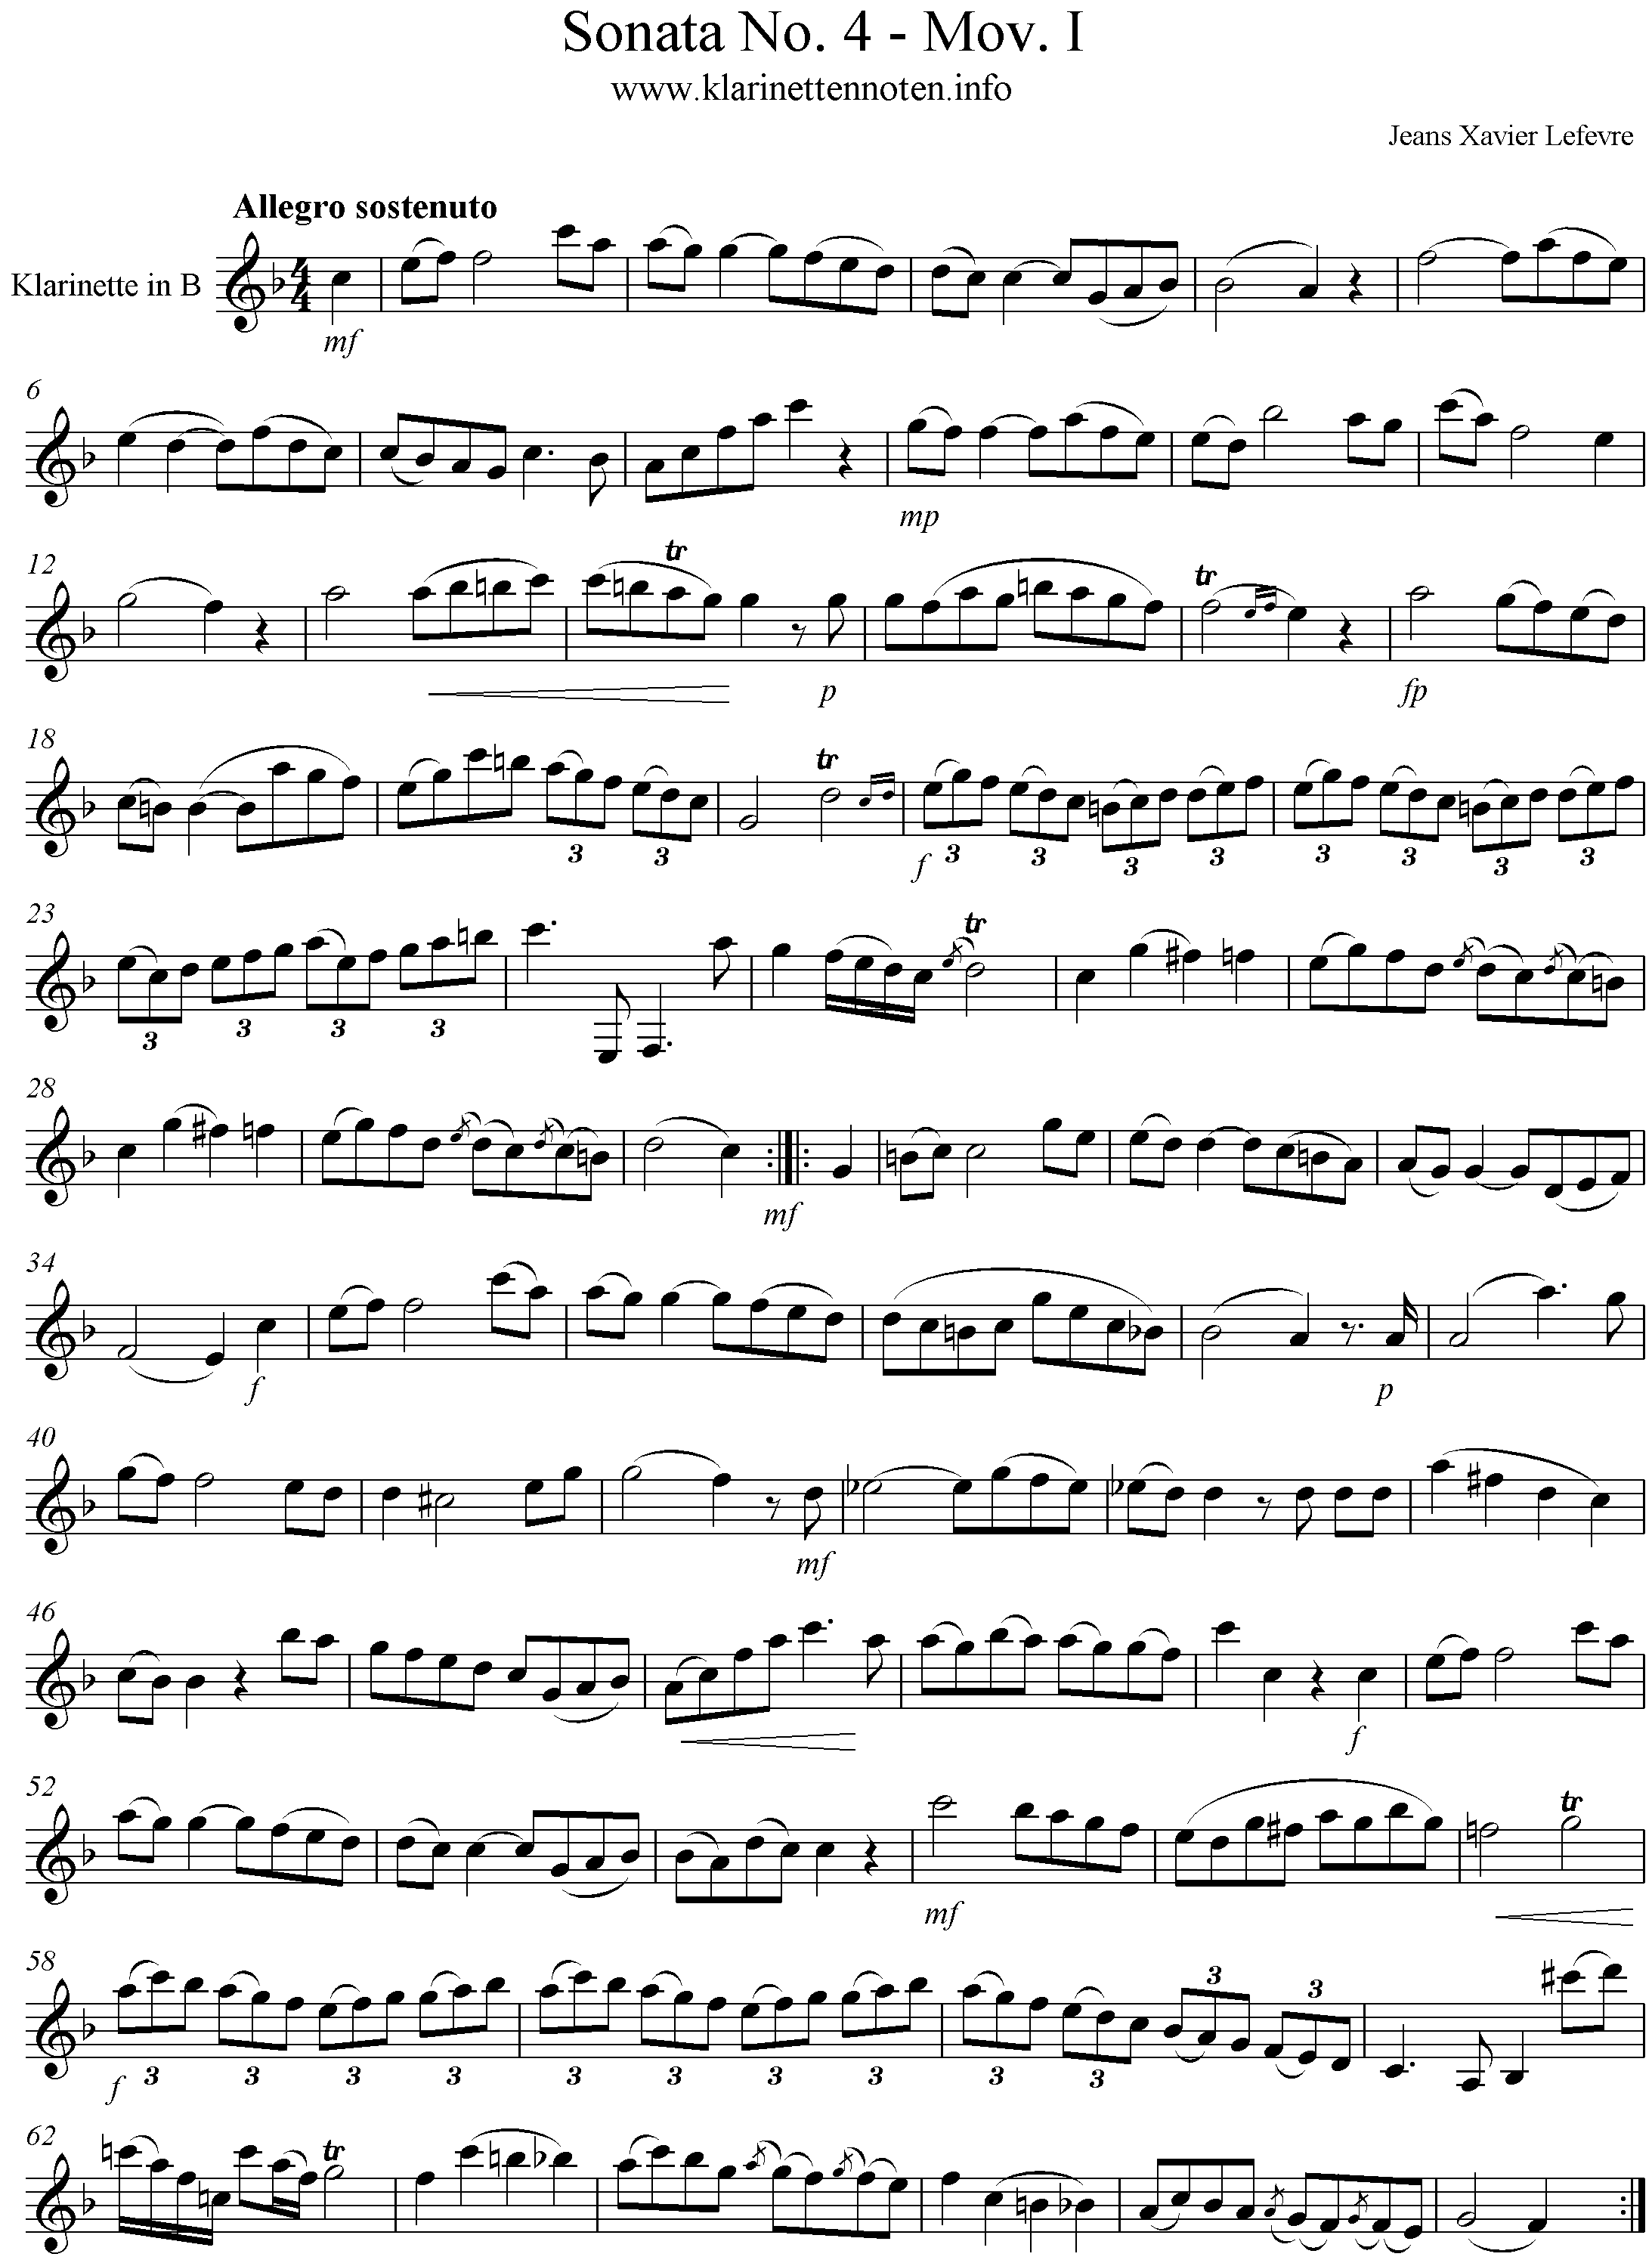 Lefevre Clarinet Sonata No. 4 Mov. I Allegro sostenuto